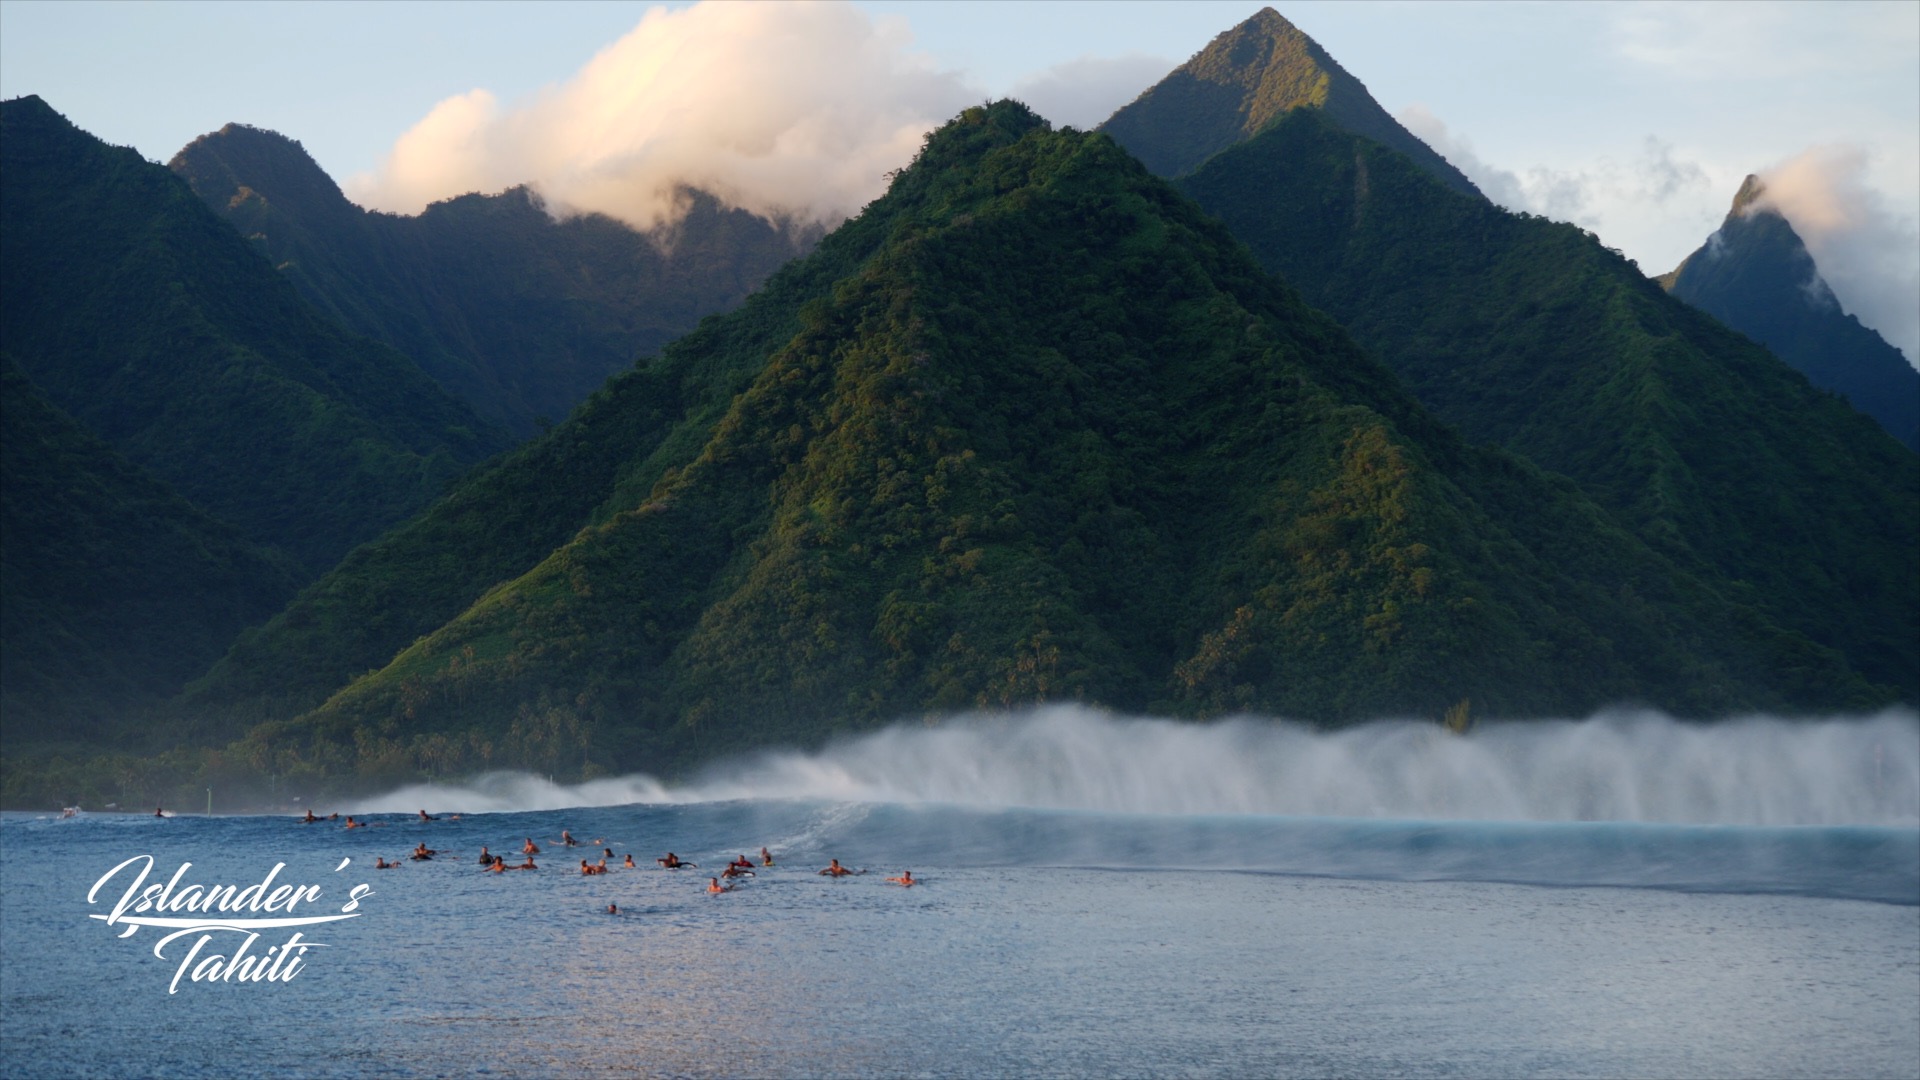 Islanders Tahiti - Saison 4 - épisode 2 - Photo 4